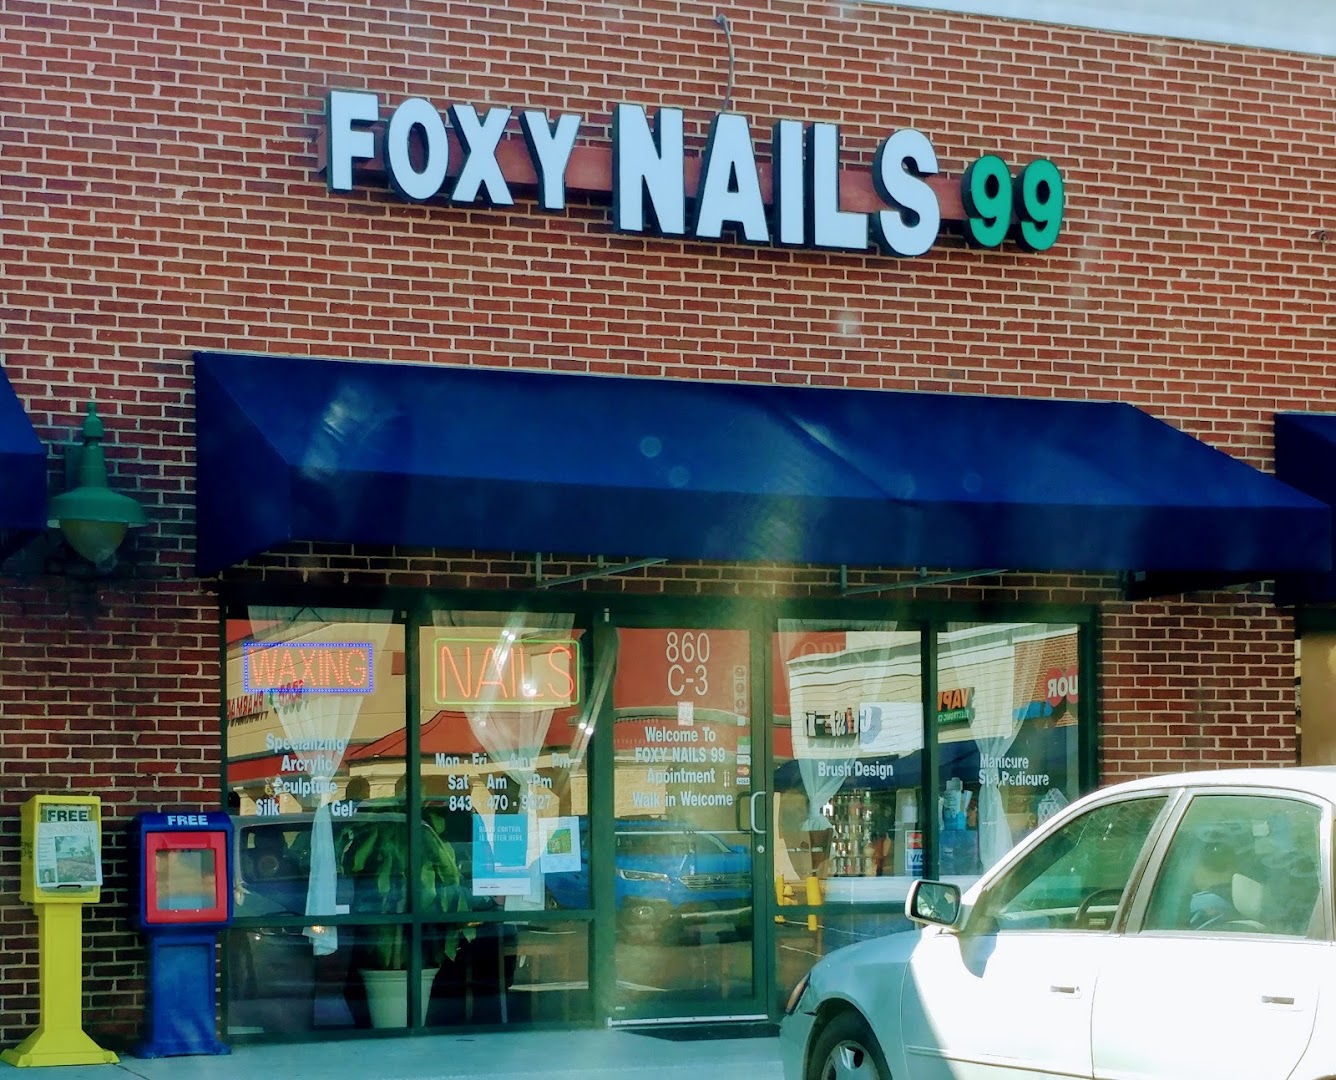 Foxy Nails 99